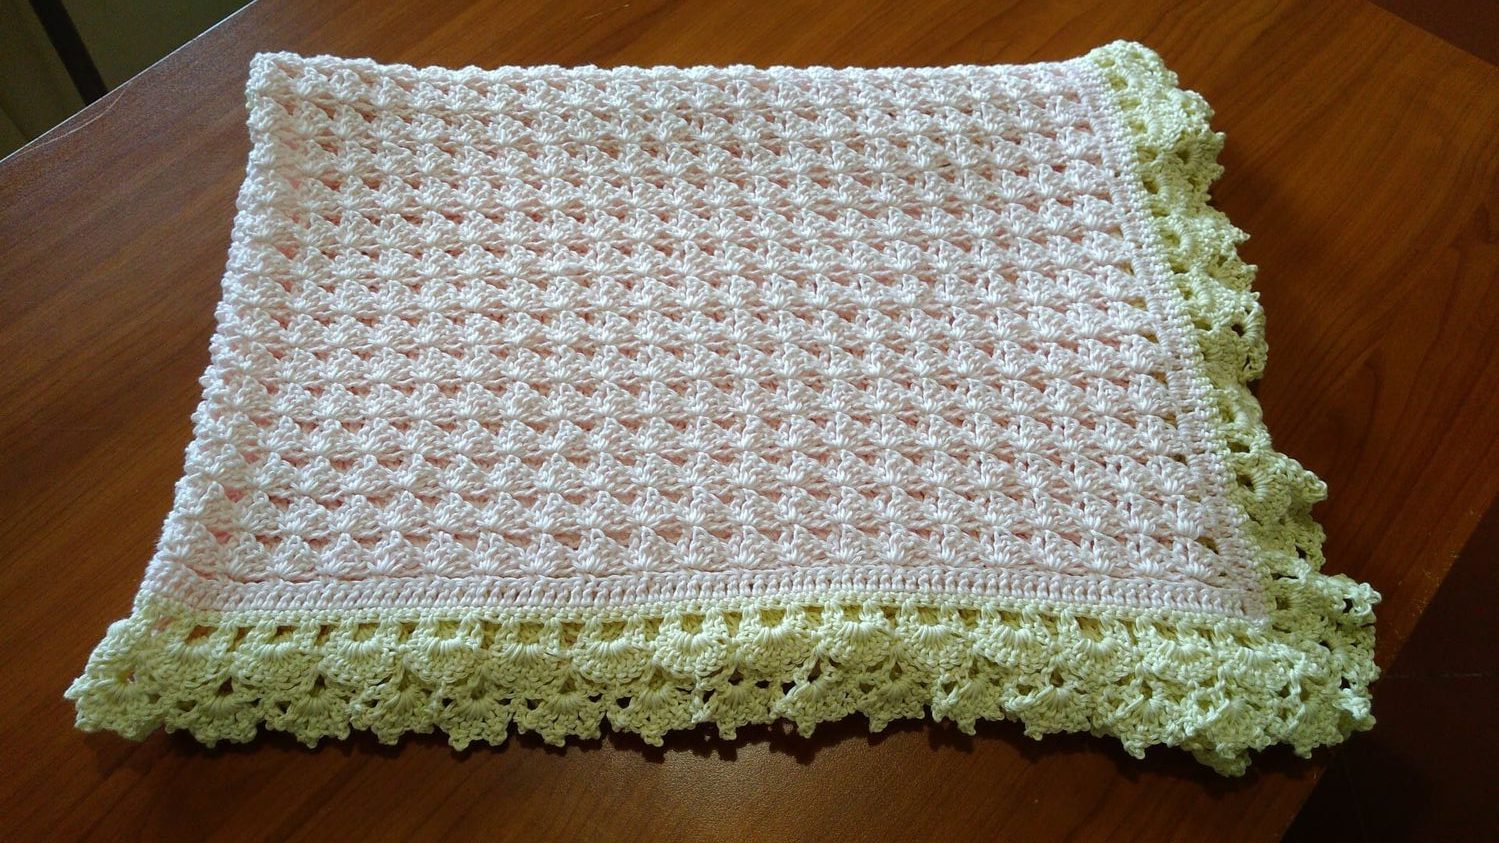 Copertina neonato uncinetto - Baby blanket crochet